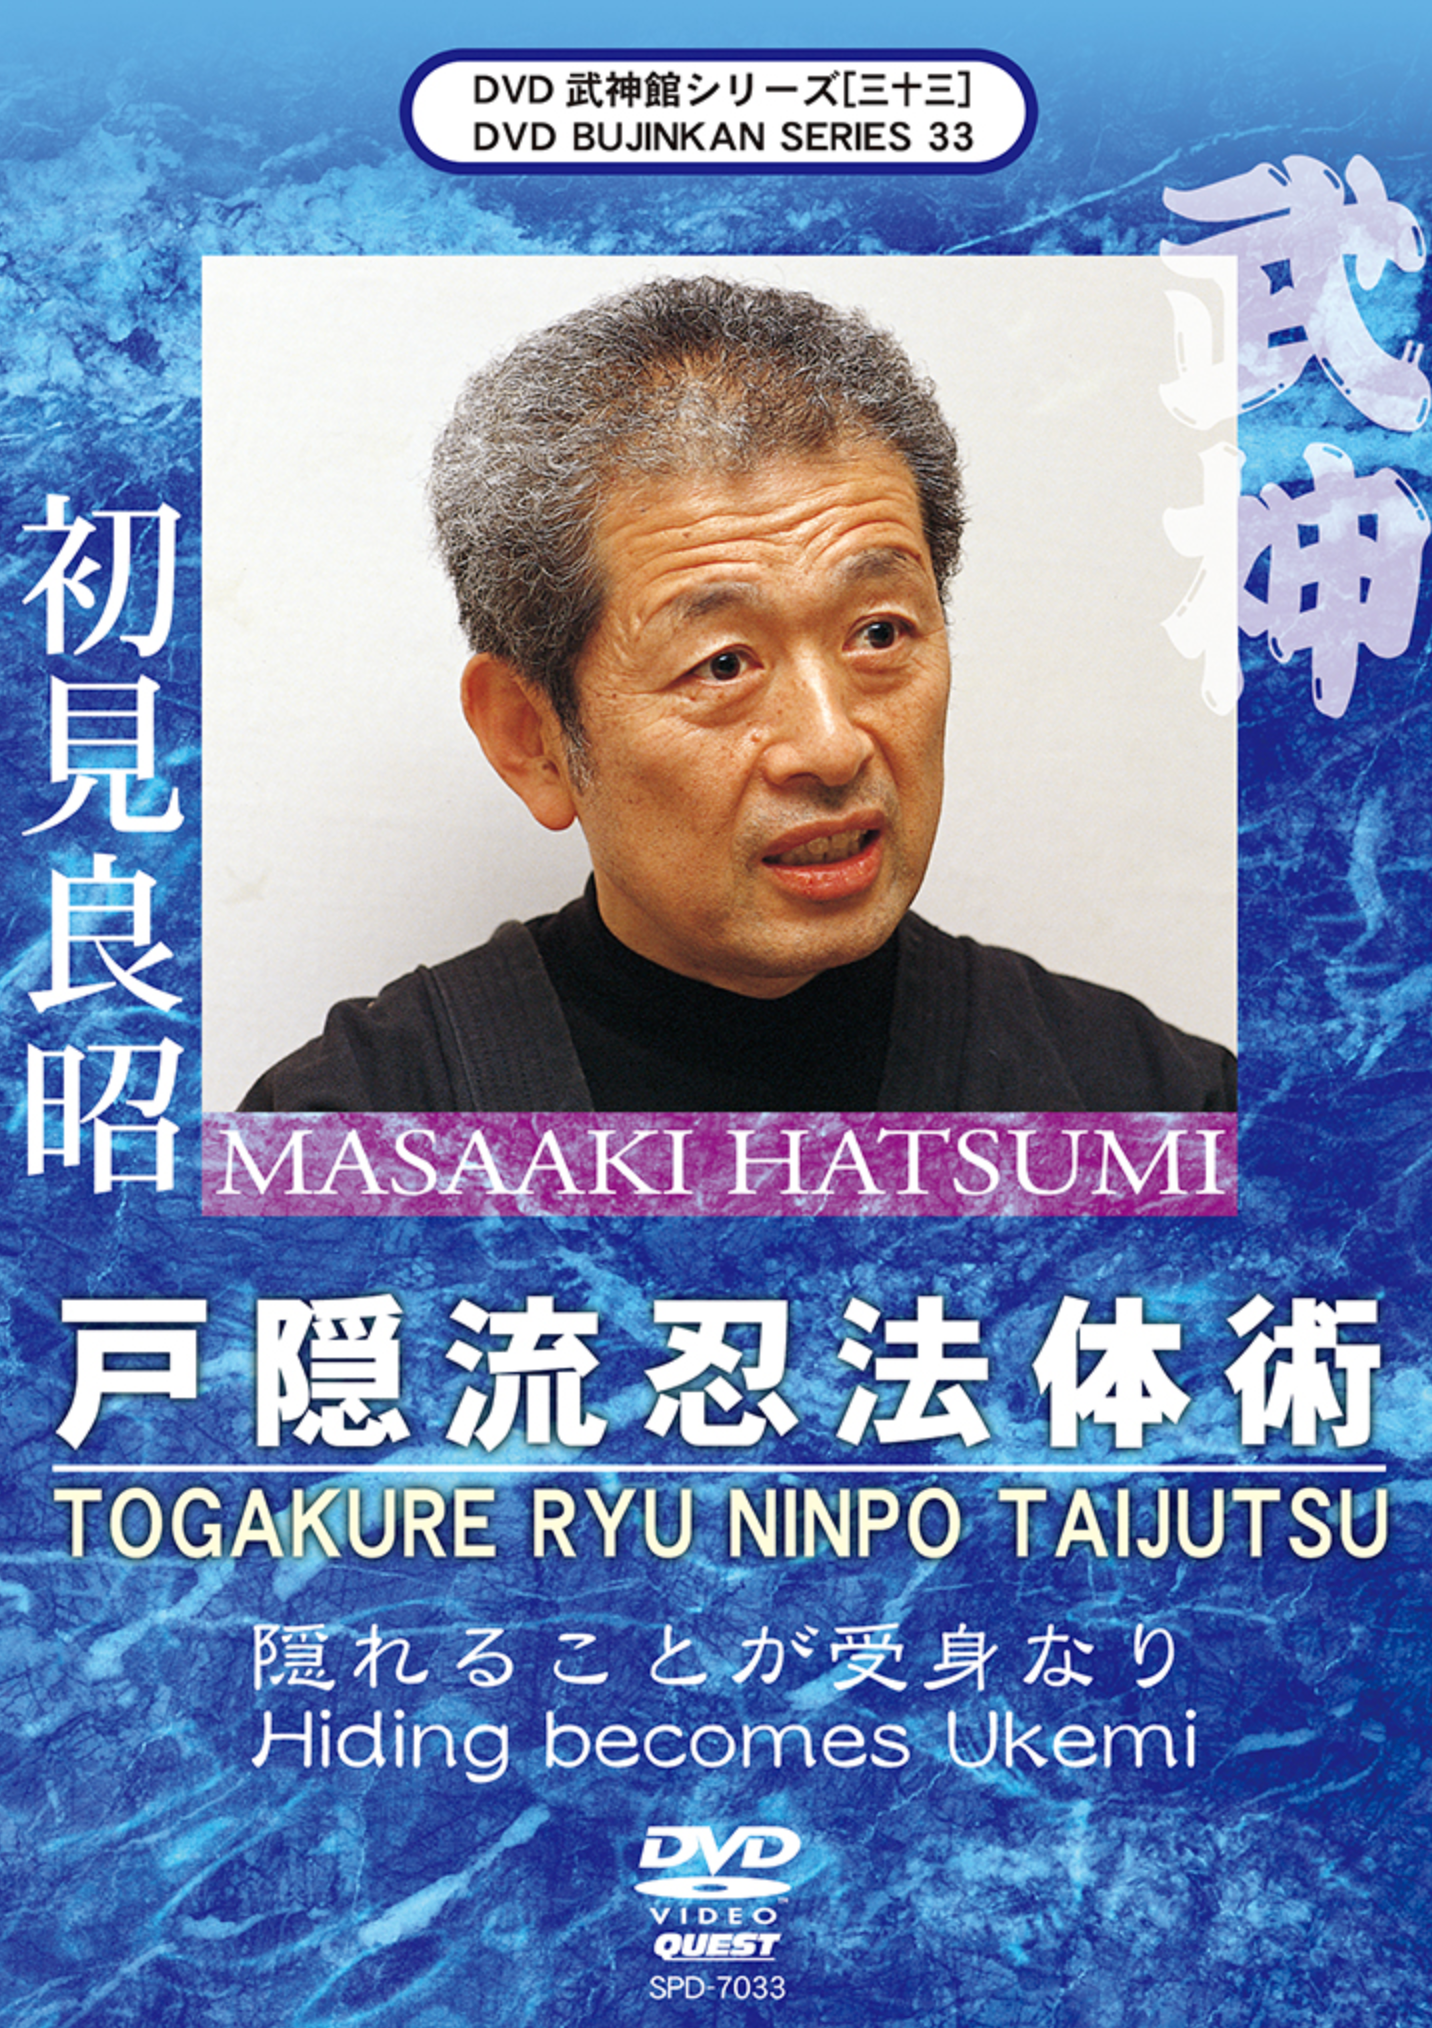 Bujinkan DVD Series 33: Togakure Ryu Ninpo Taijutsu with Masaaki Hatsumi - Budovideos Inc